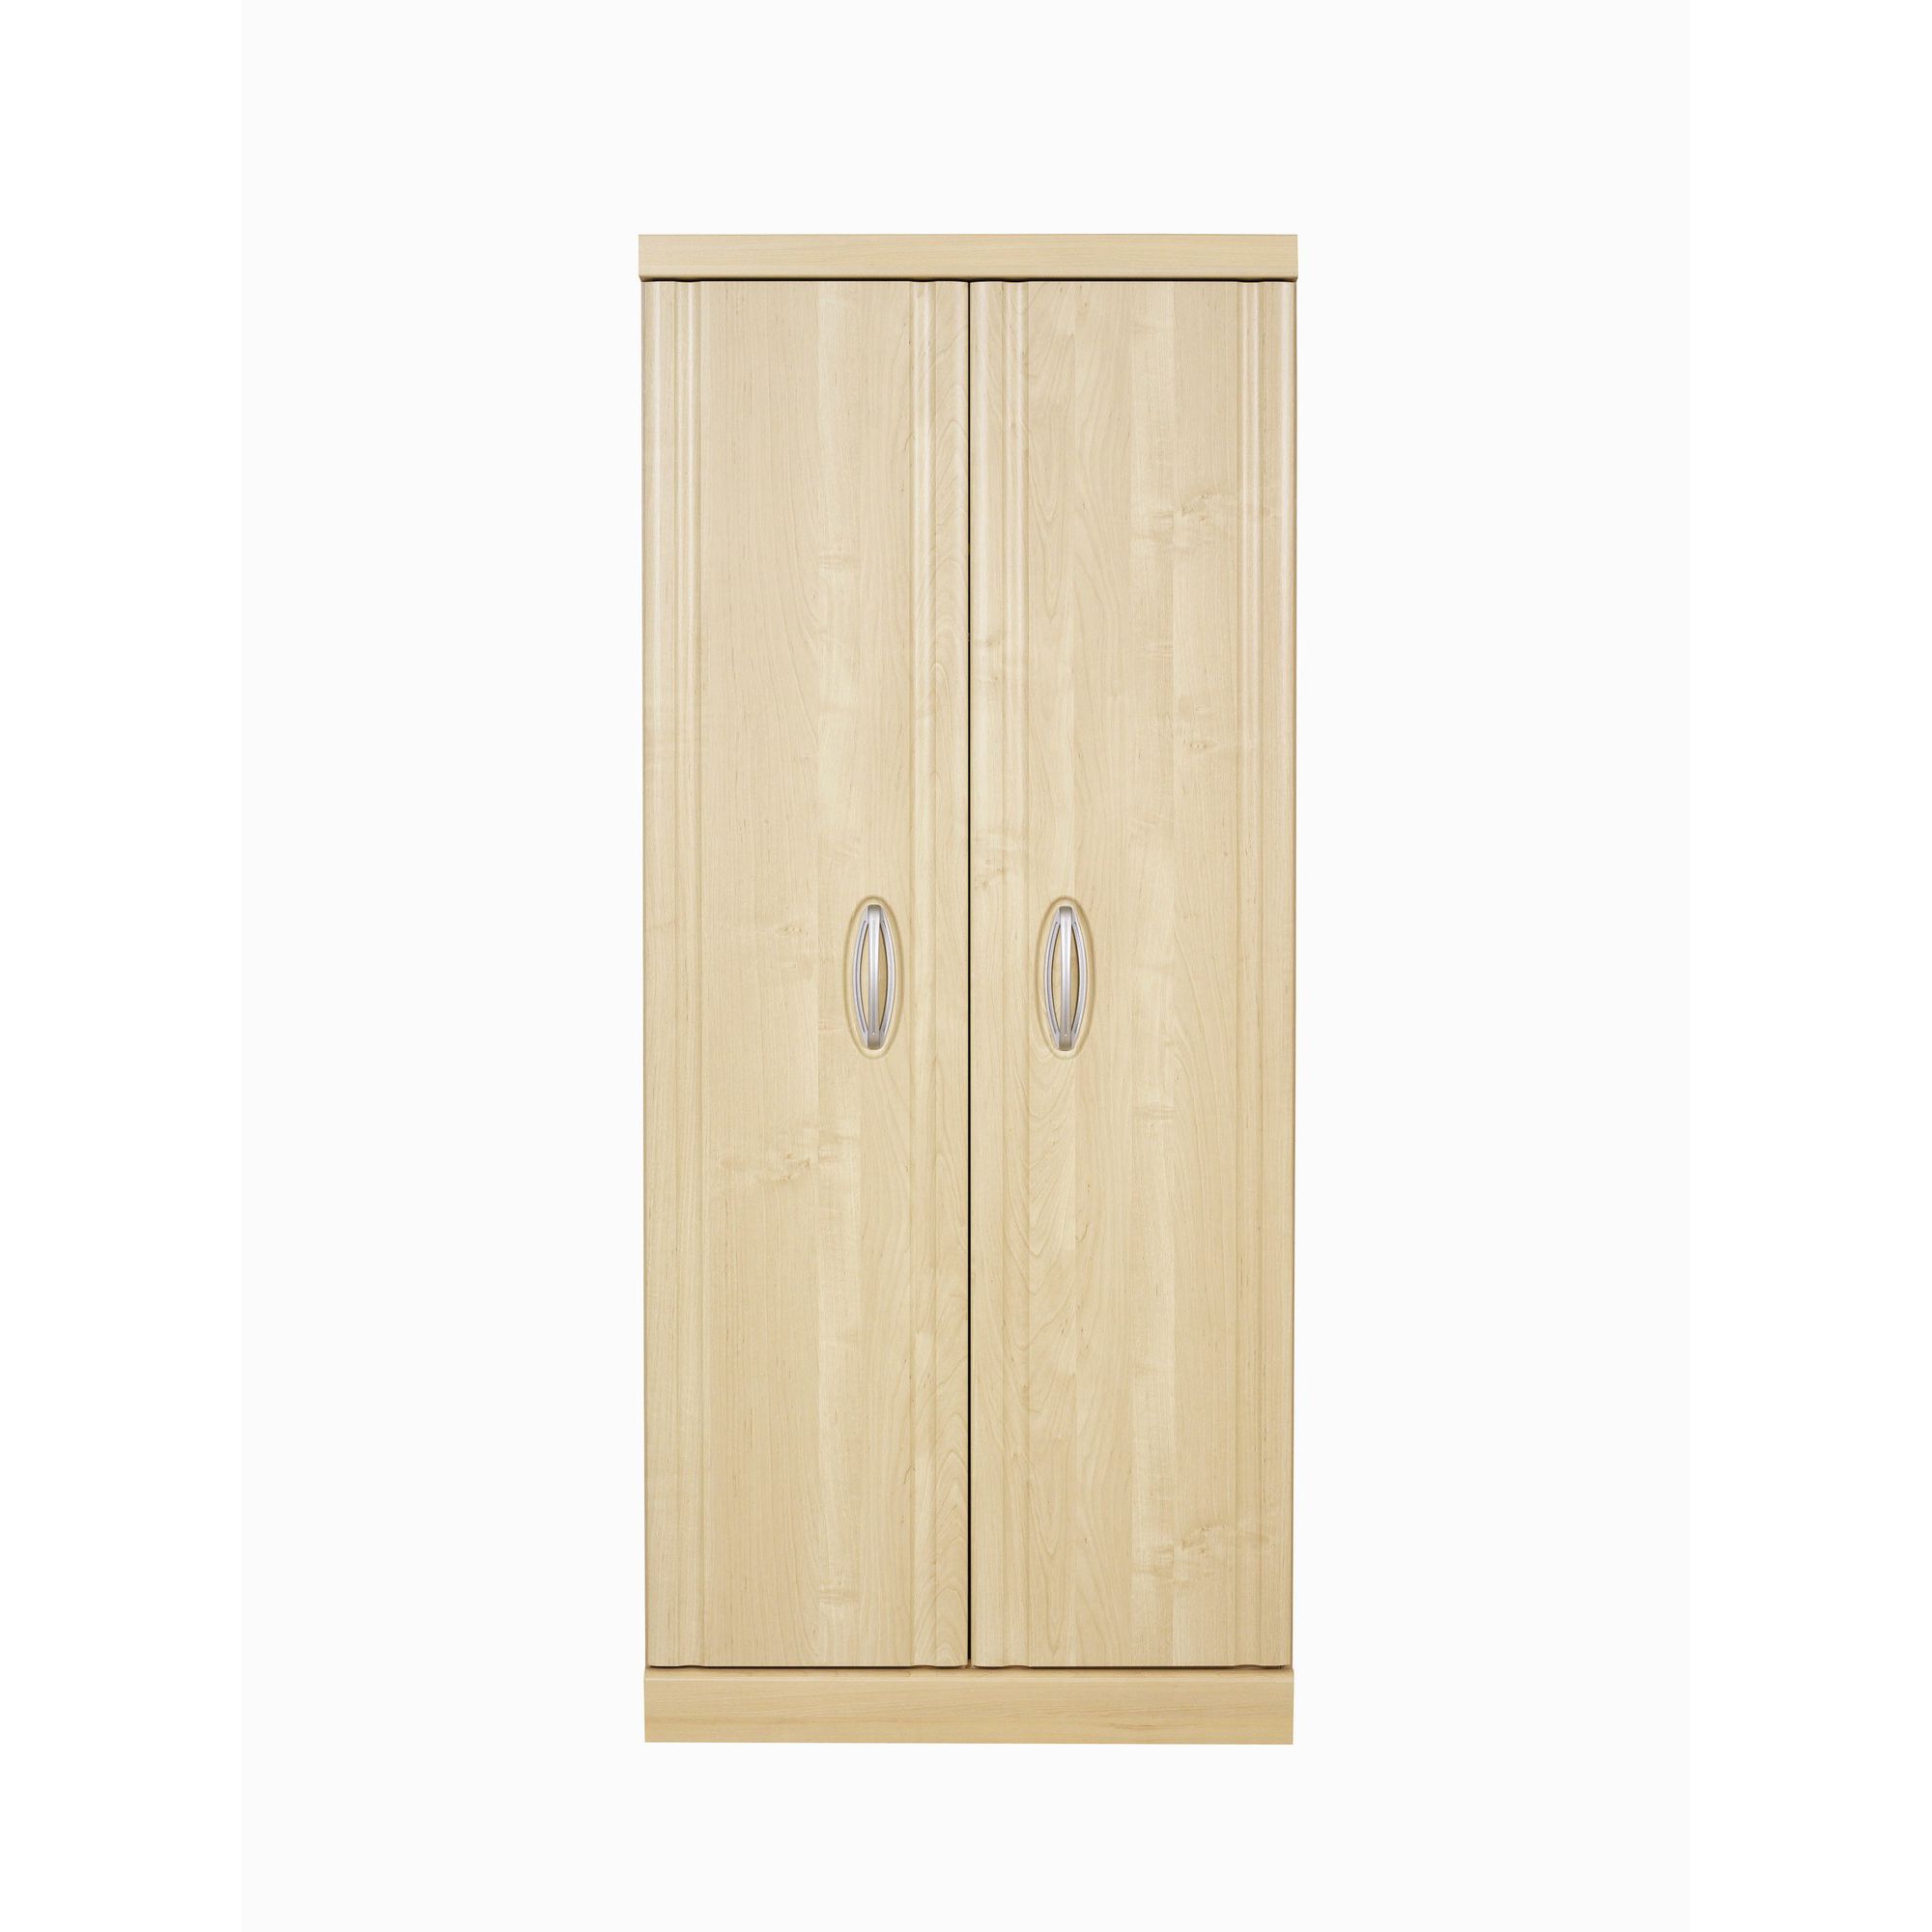 Caxton Strata 2 Door Short Height Wardrobe in Pear Wood at Tesco Direct